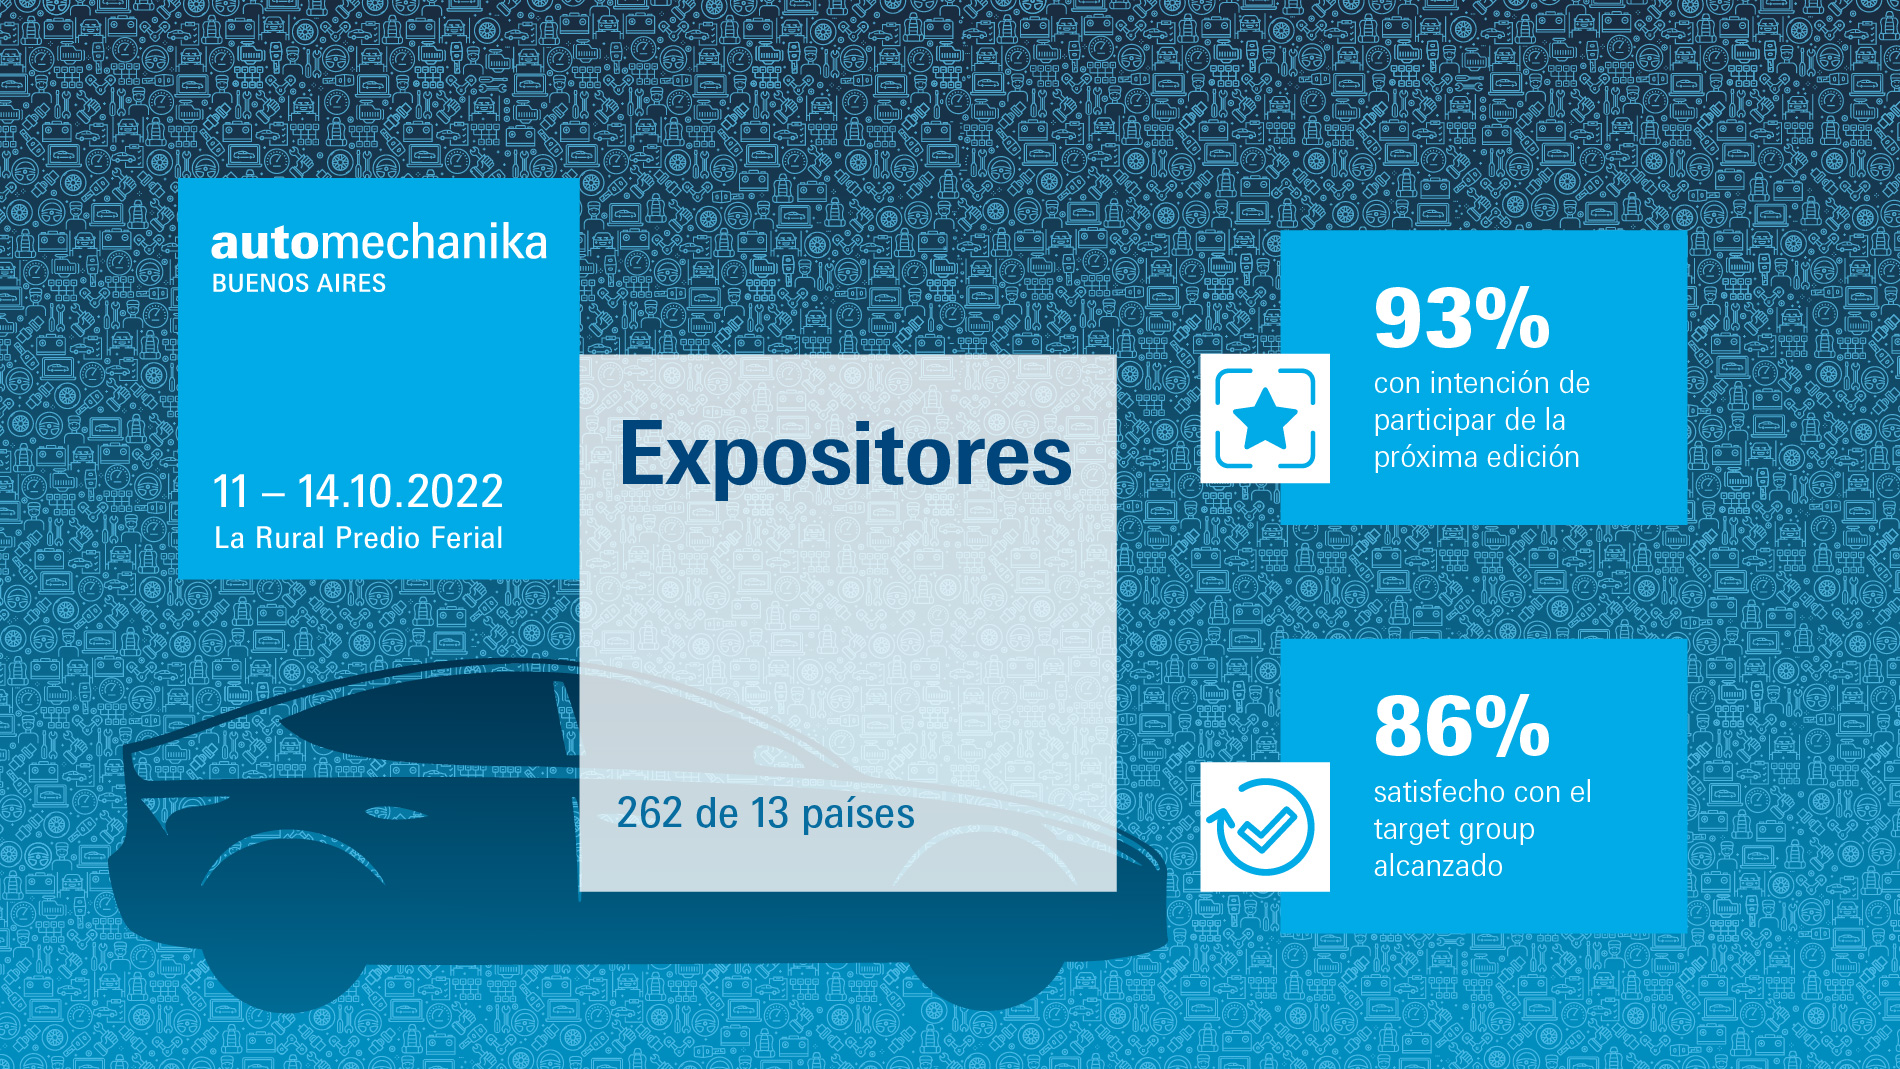 Automechanika Aires: Expositores